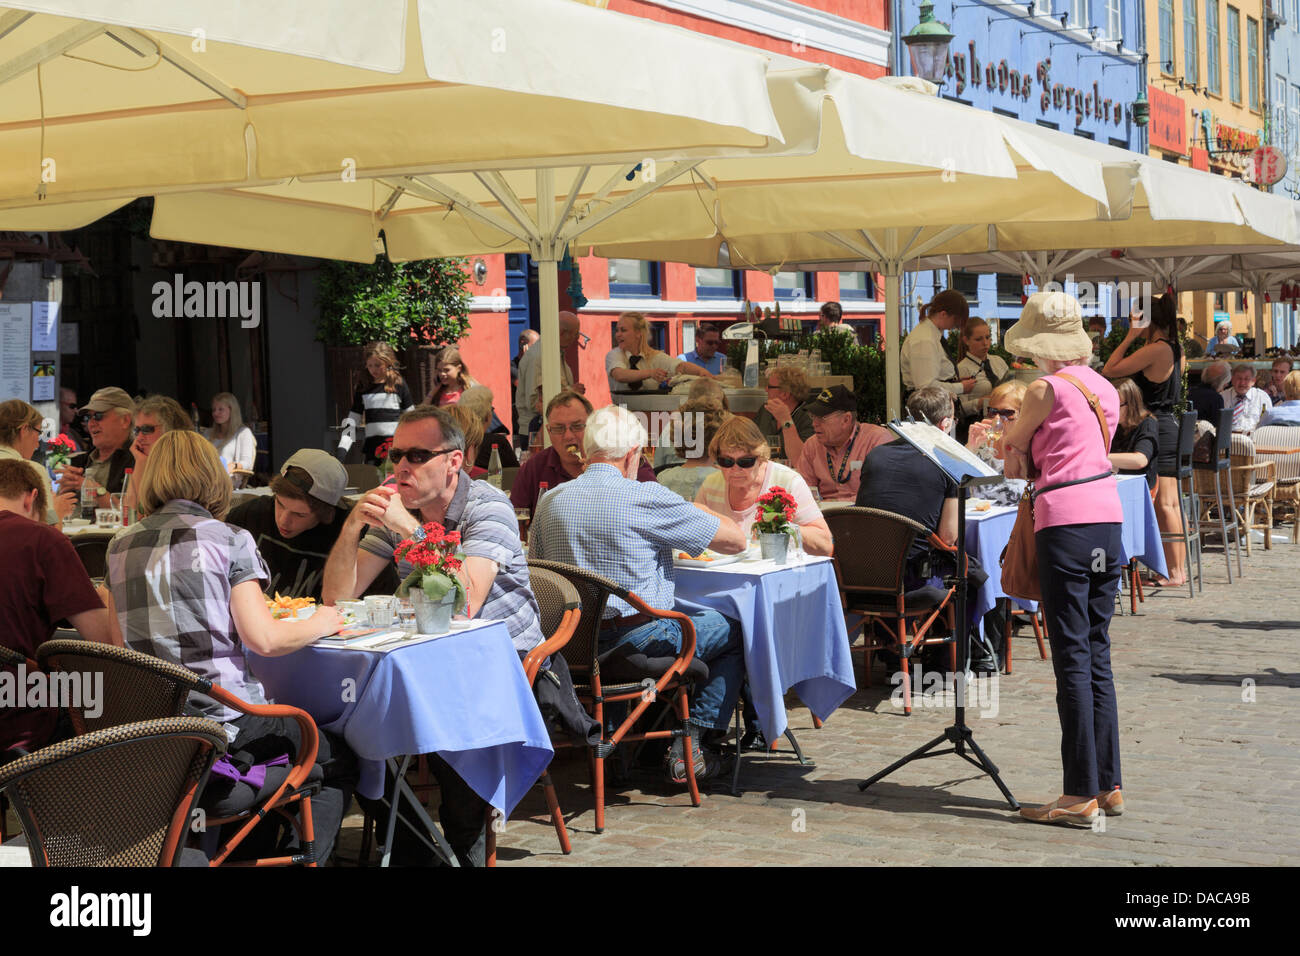 Busy outdoor cafés and restaurants with people dining out under sun umbrellas on street in summer. Nyhavn Copenhagen Zealand Denmark Stock Photo